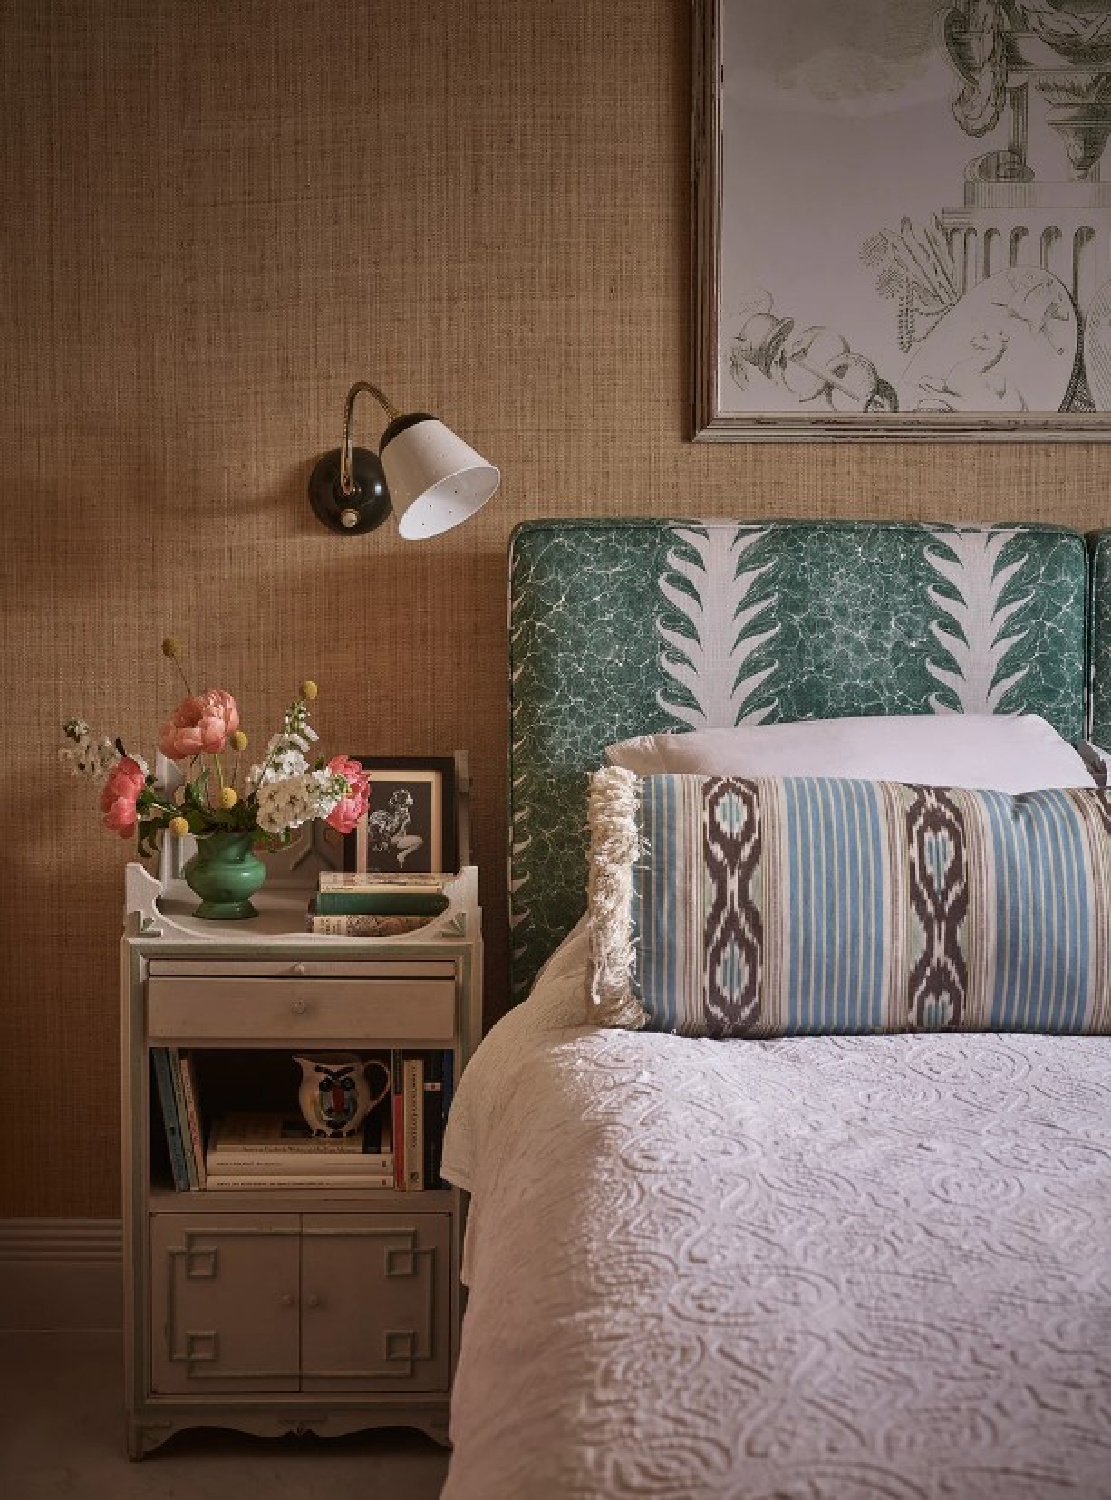 Beautiful bedroom - Simon Brown photo and Beata Heuman interior design. #beataheuman #swedishfarmhouse